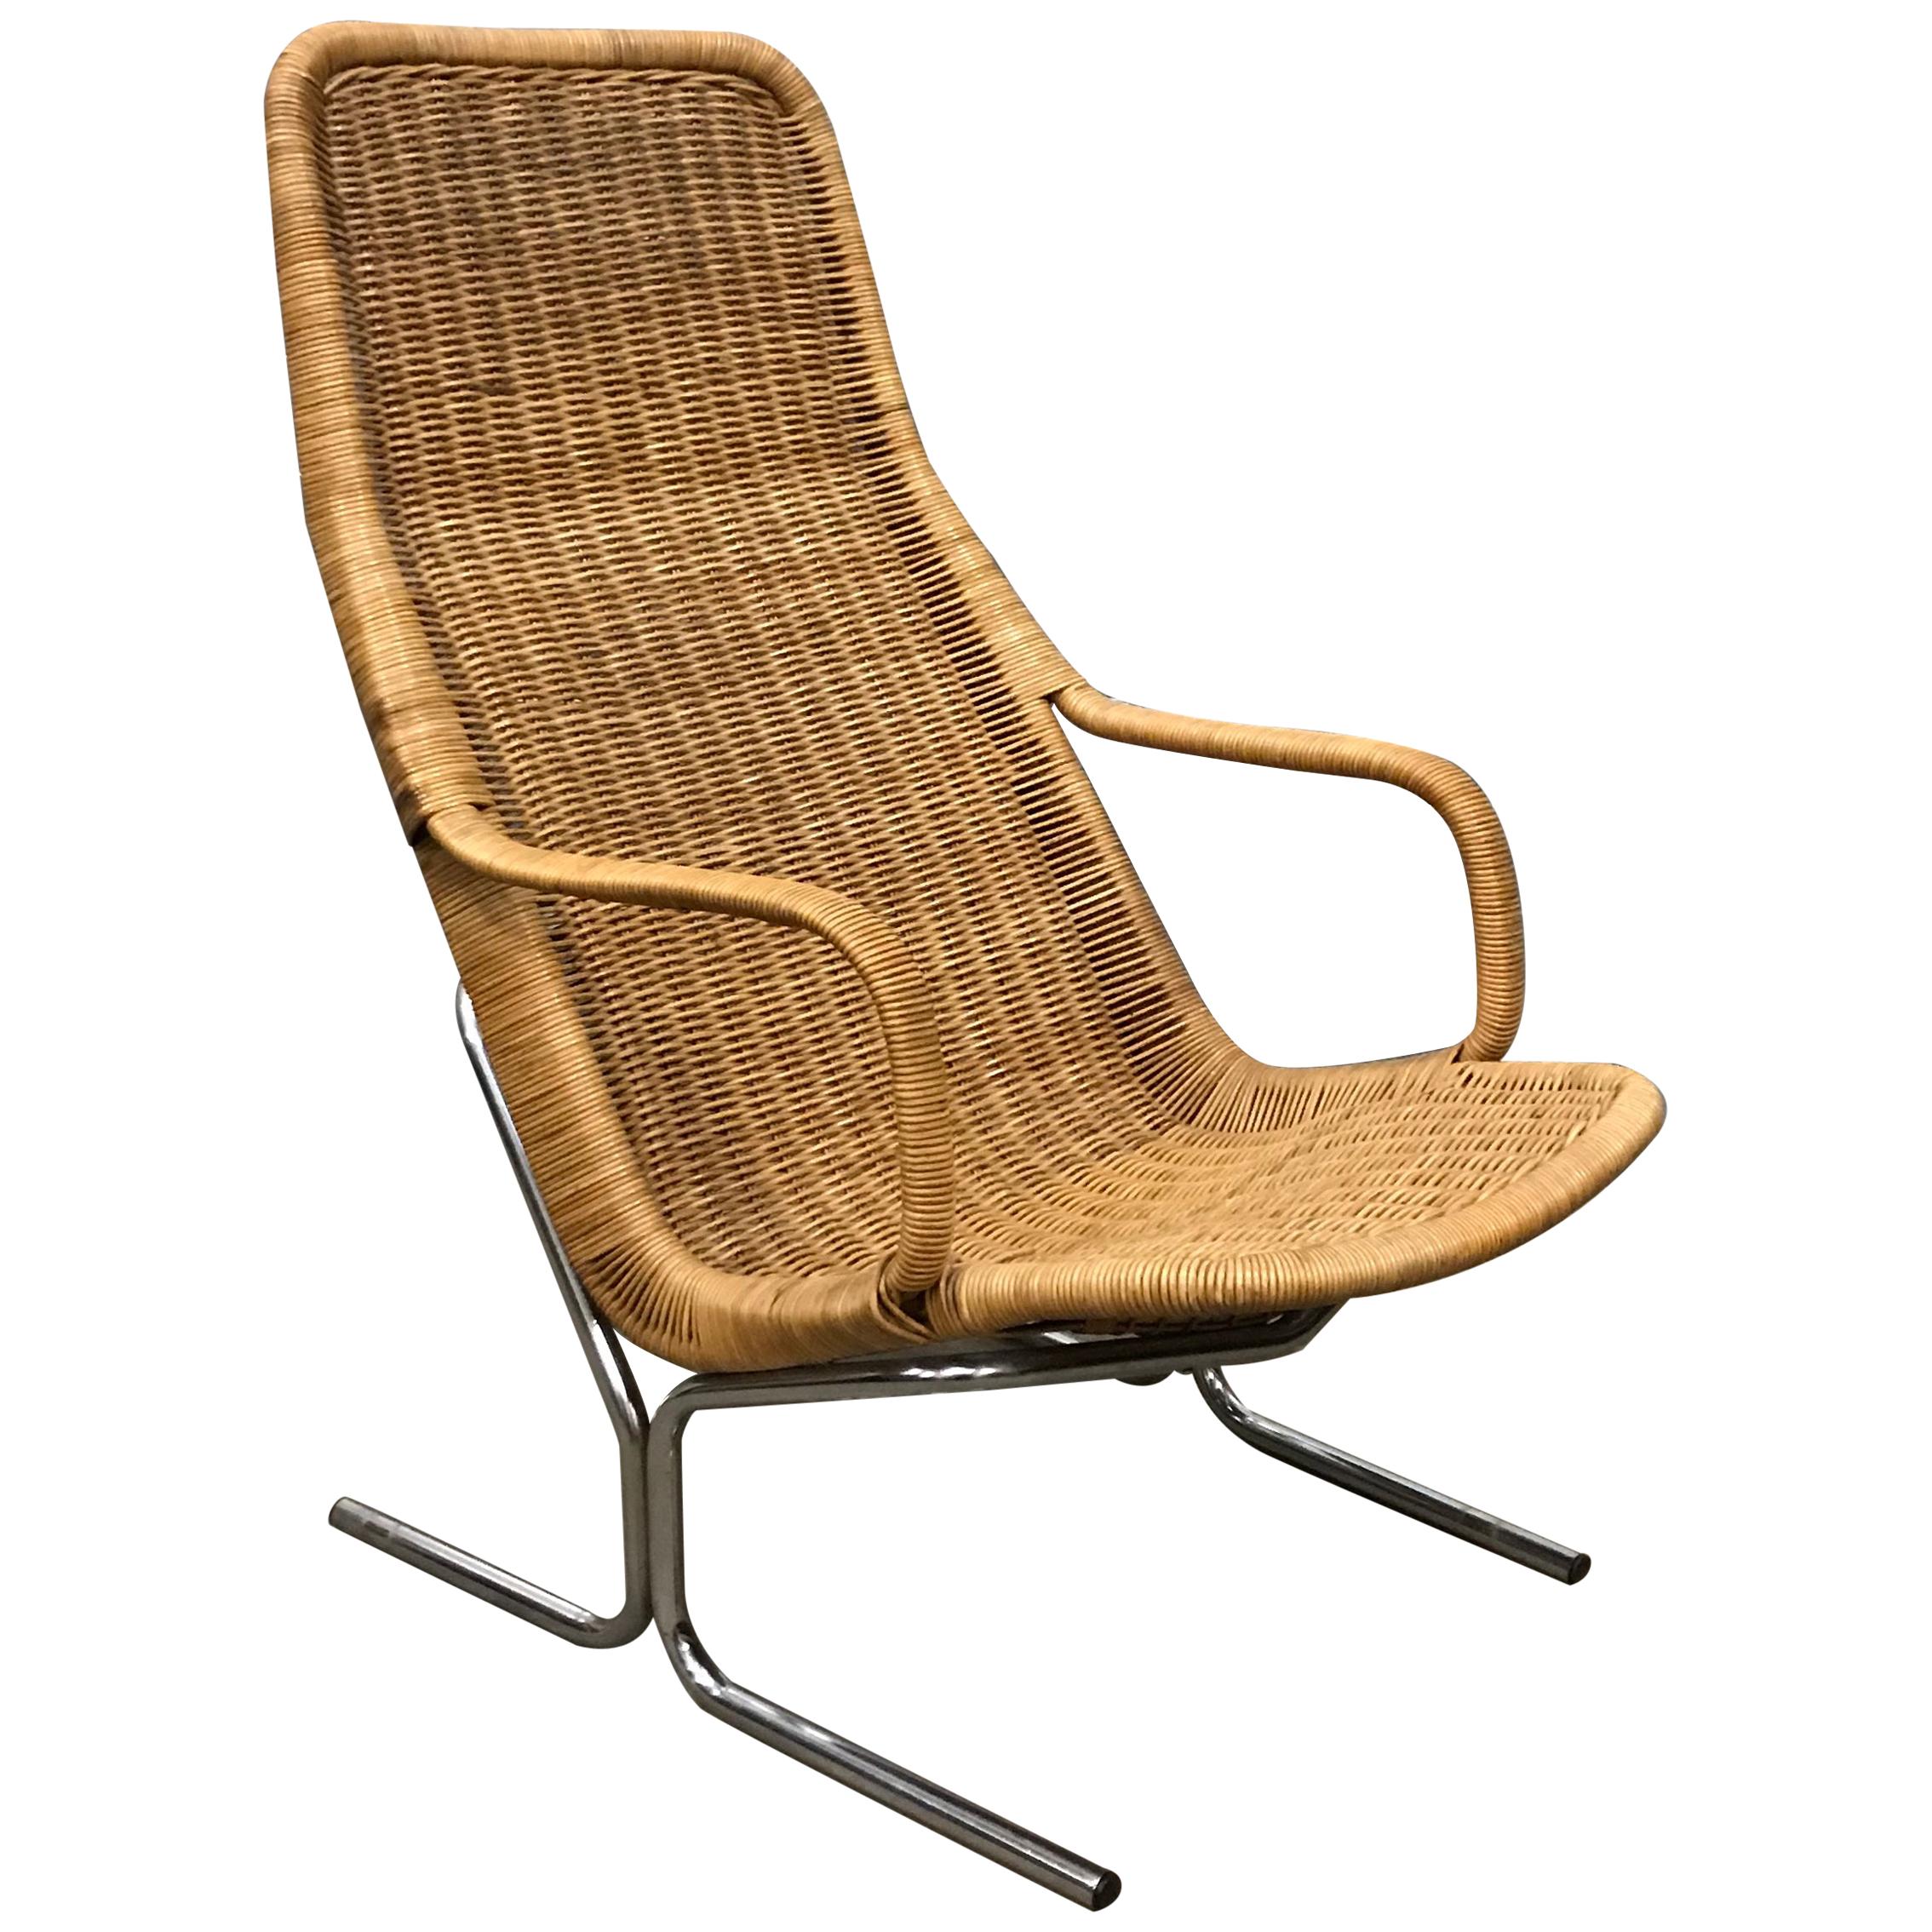 1961 Dirk Van Sliedregt, Rare 514 Original Wicker Lounge Chair with Chrome Base